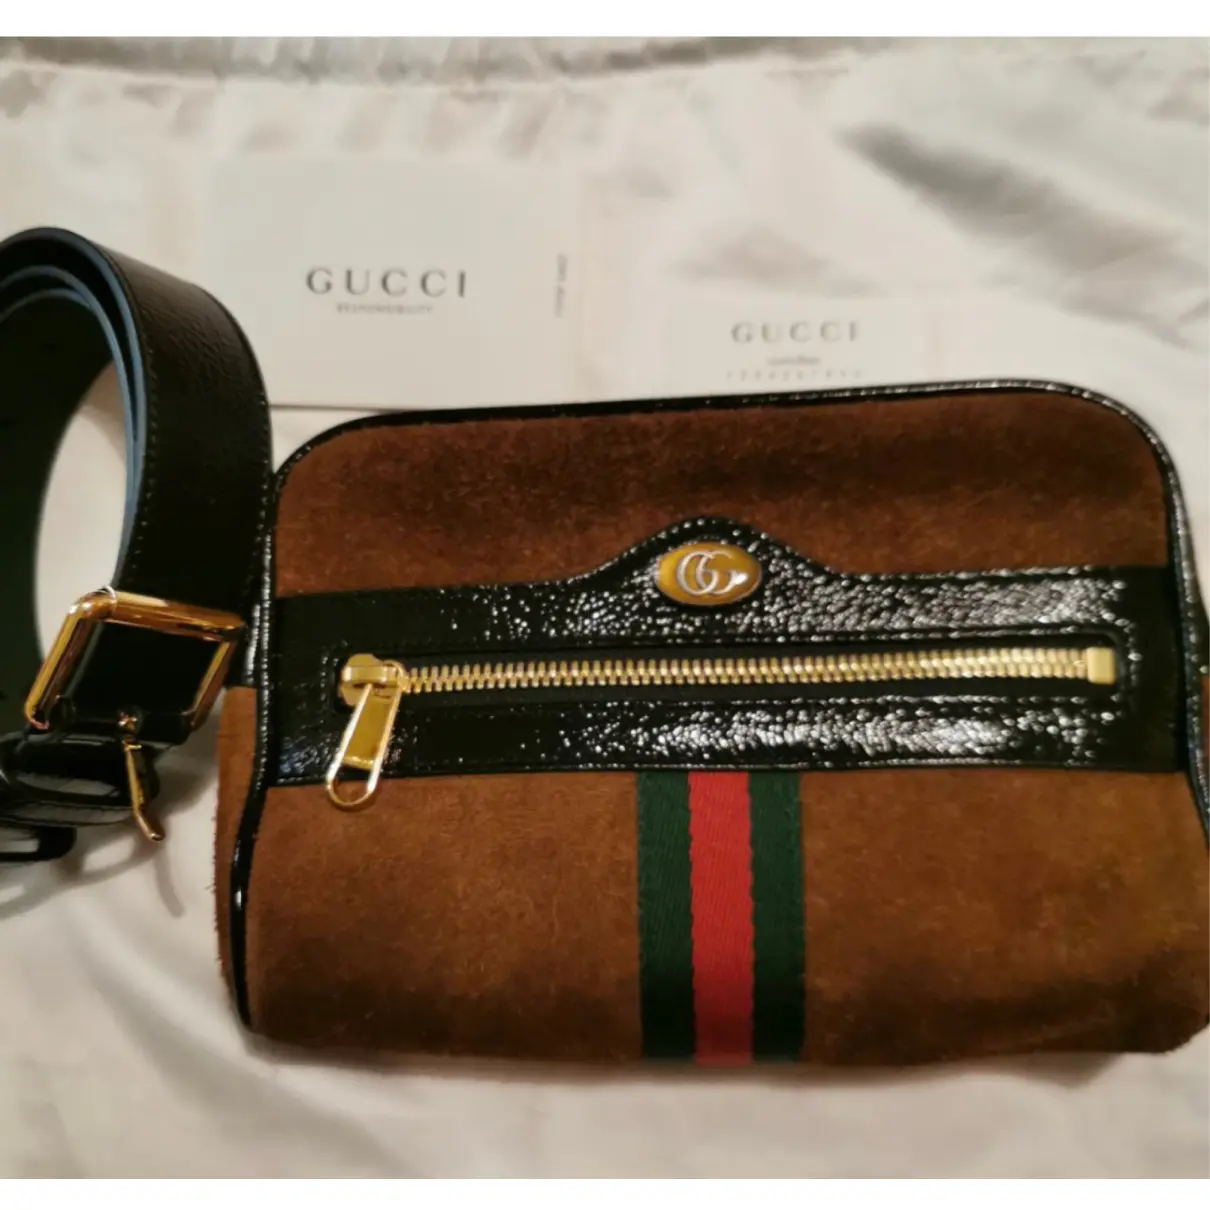 Buy Gucci Ophidia Zip leather handbag online